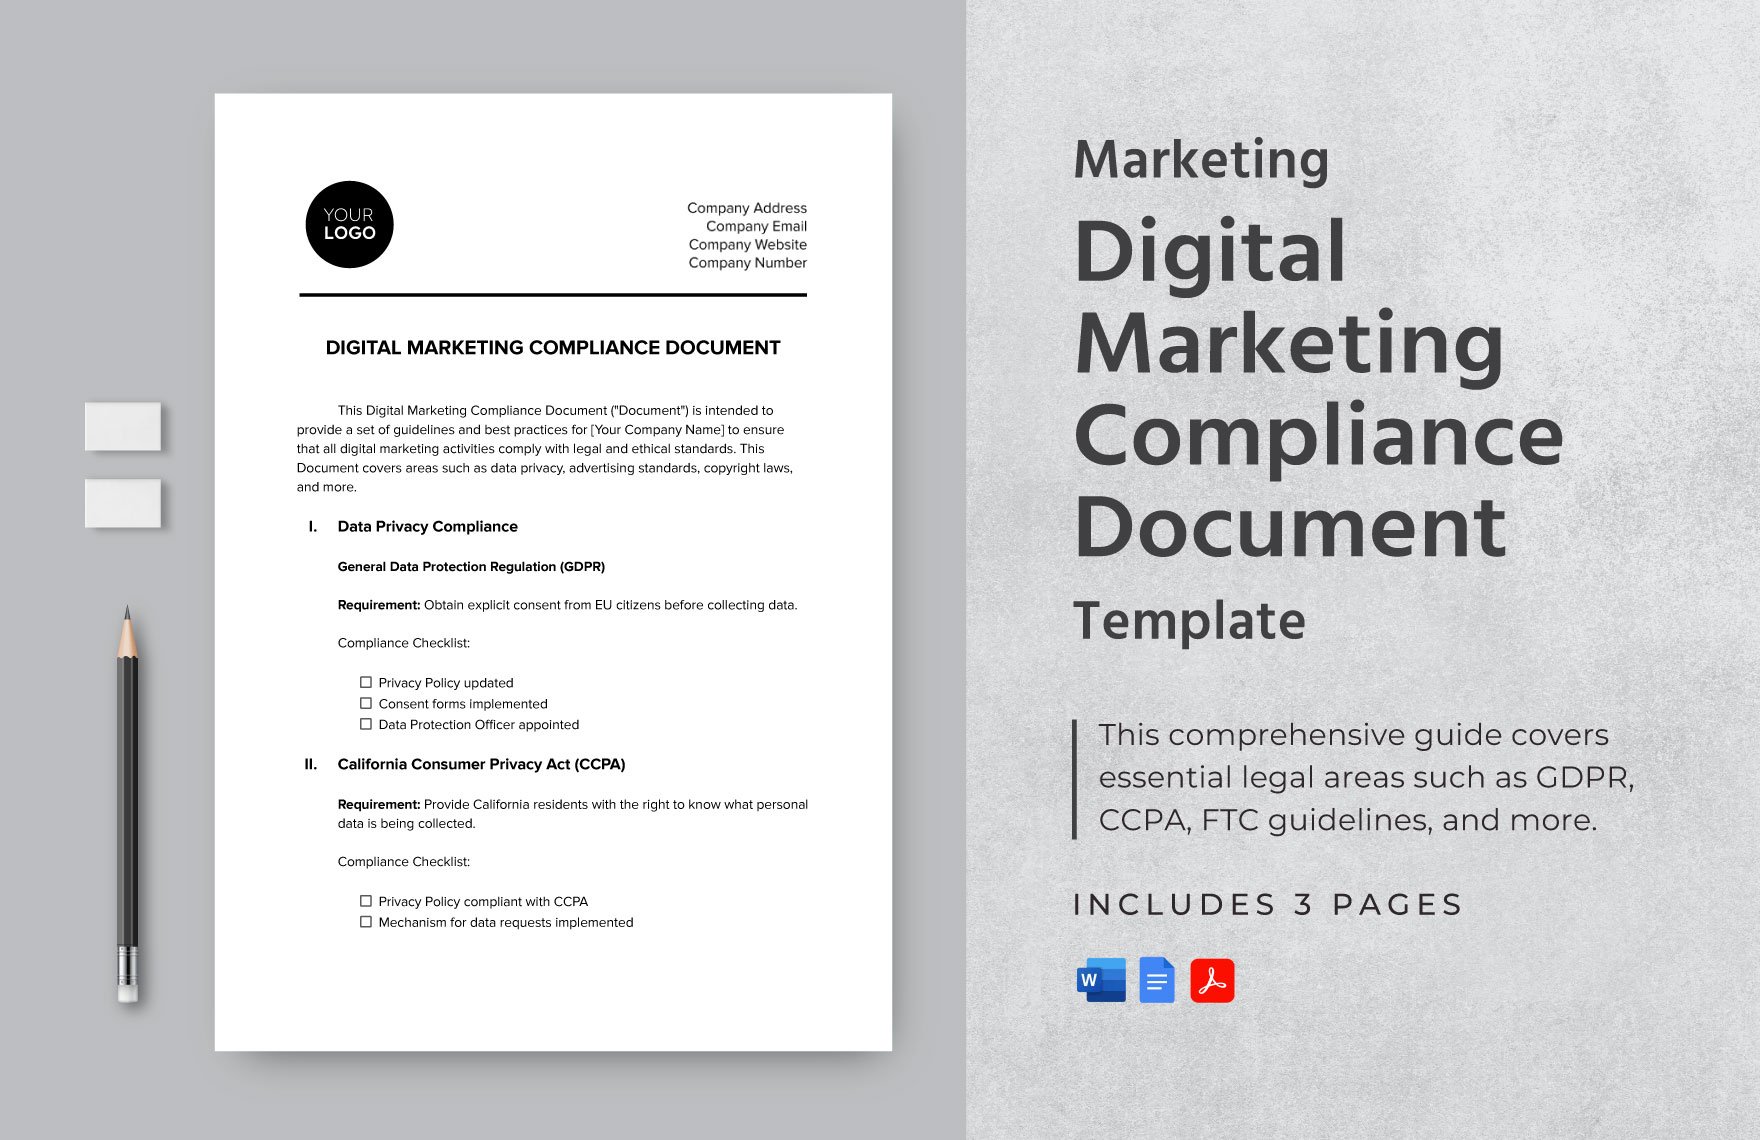 Marketing Digital Marketing Compliance Document Template in Word, Google Docs, PDF